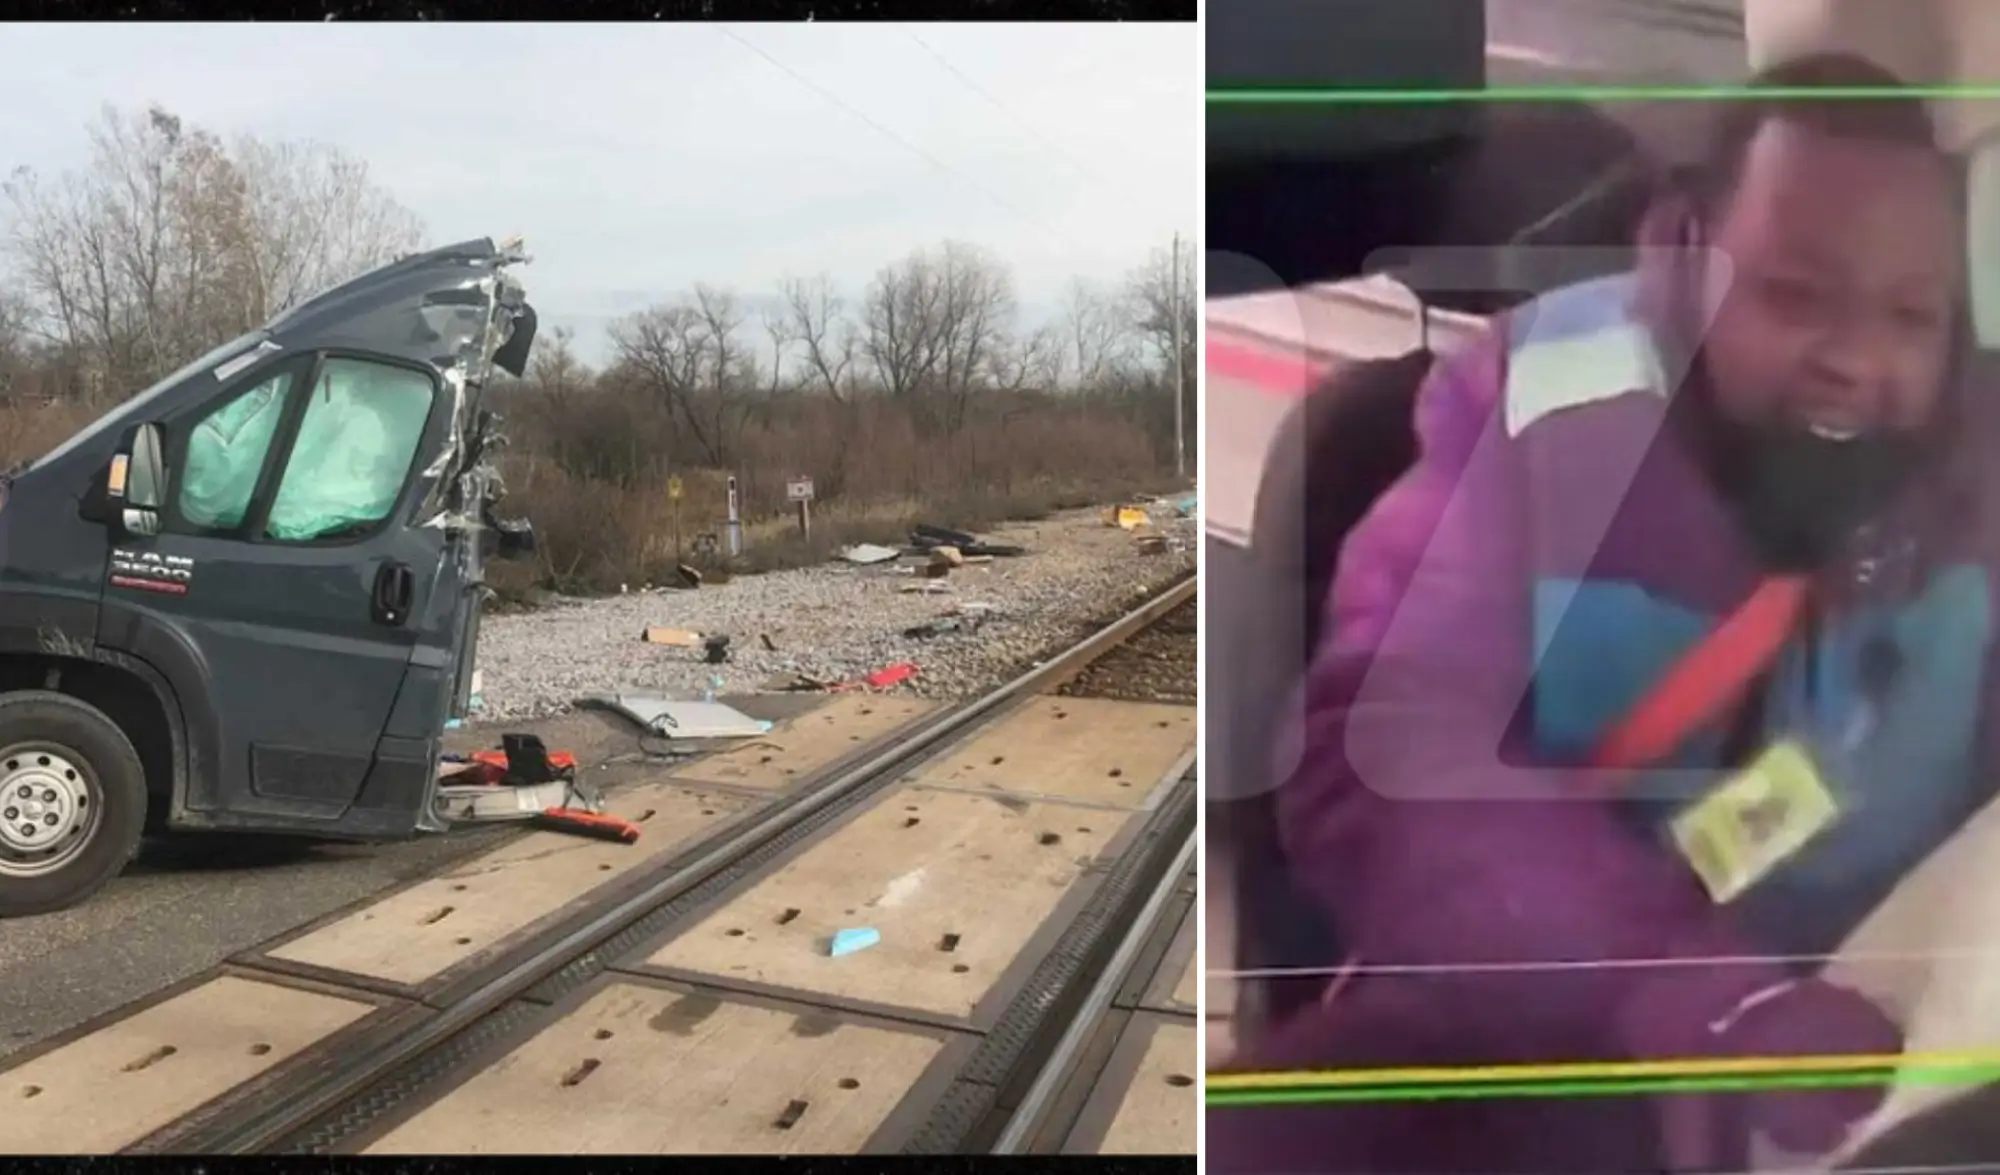 New Video Reveals Shocking Amazon Van Accident on Railroad Track